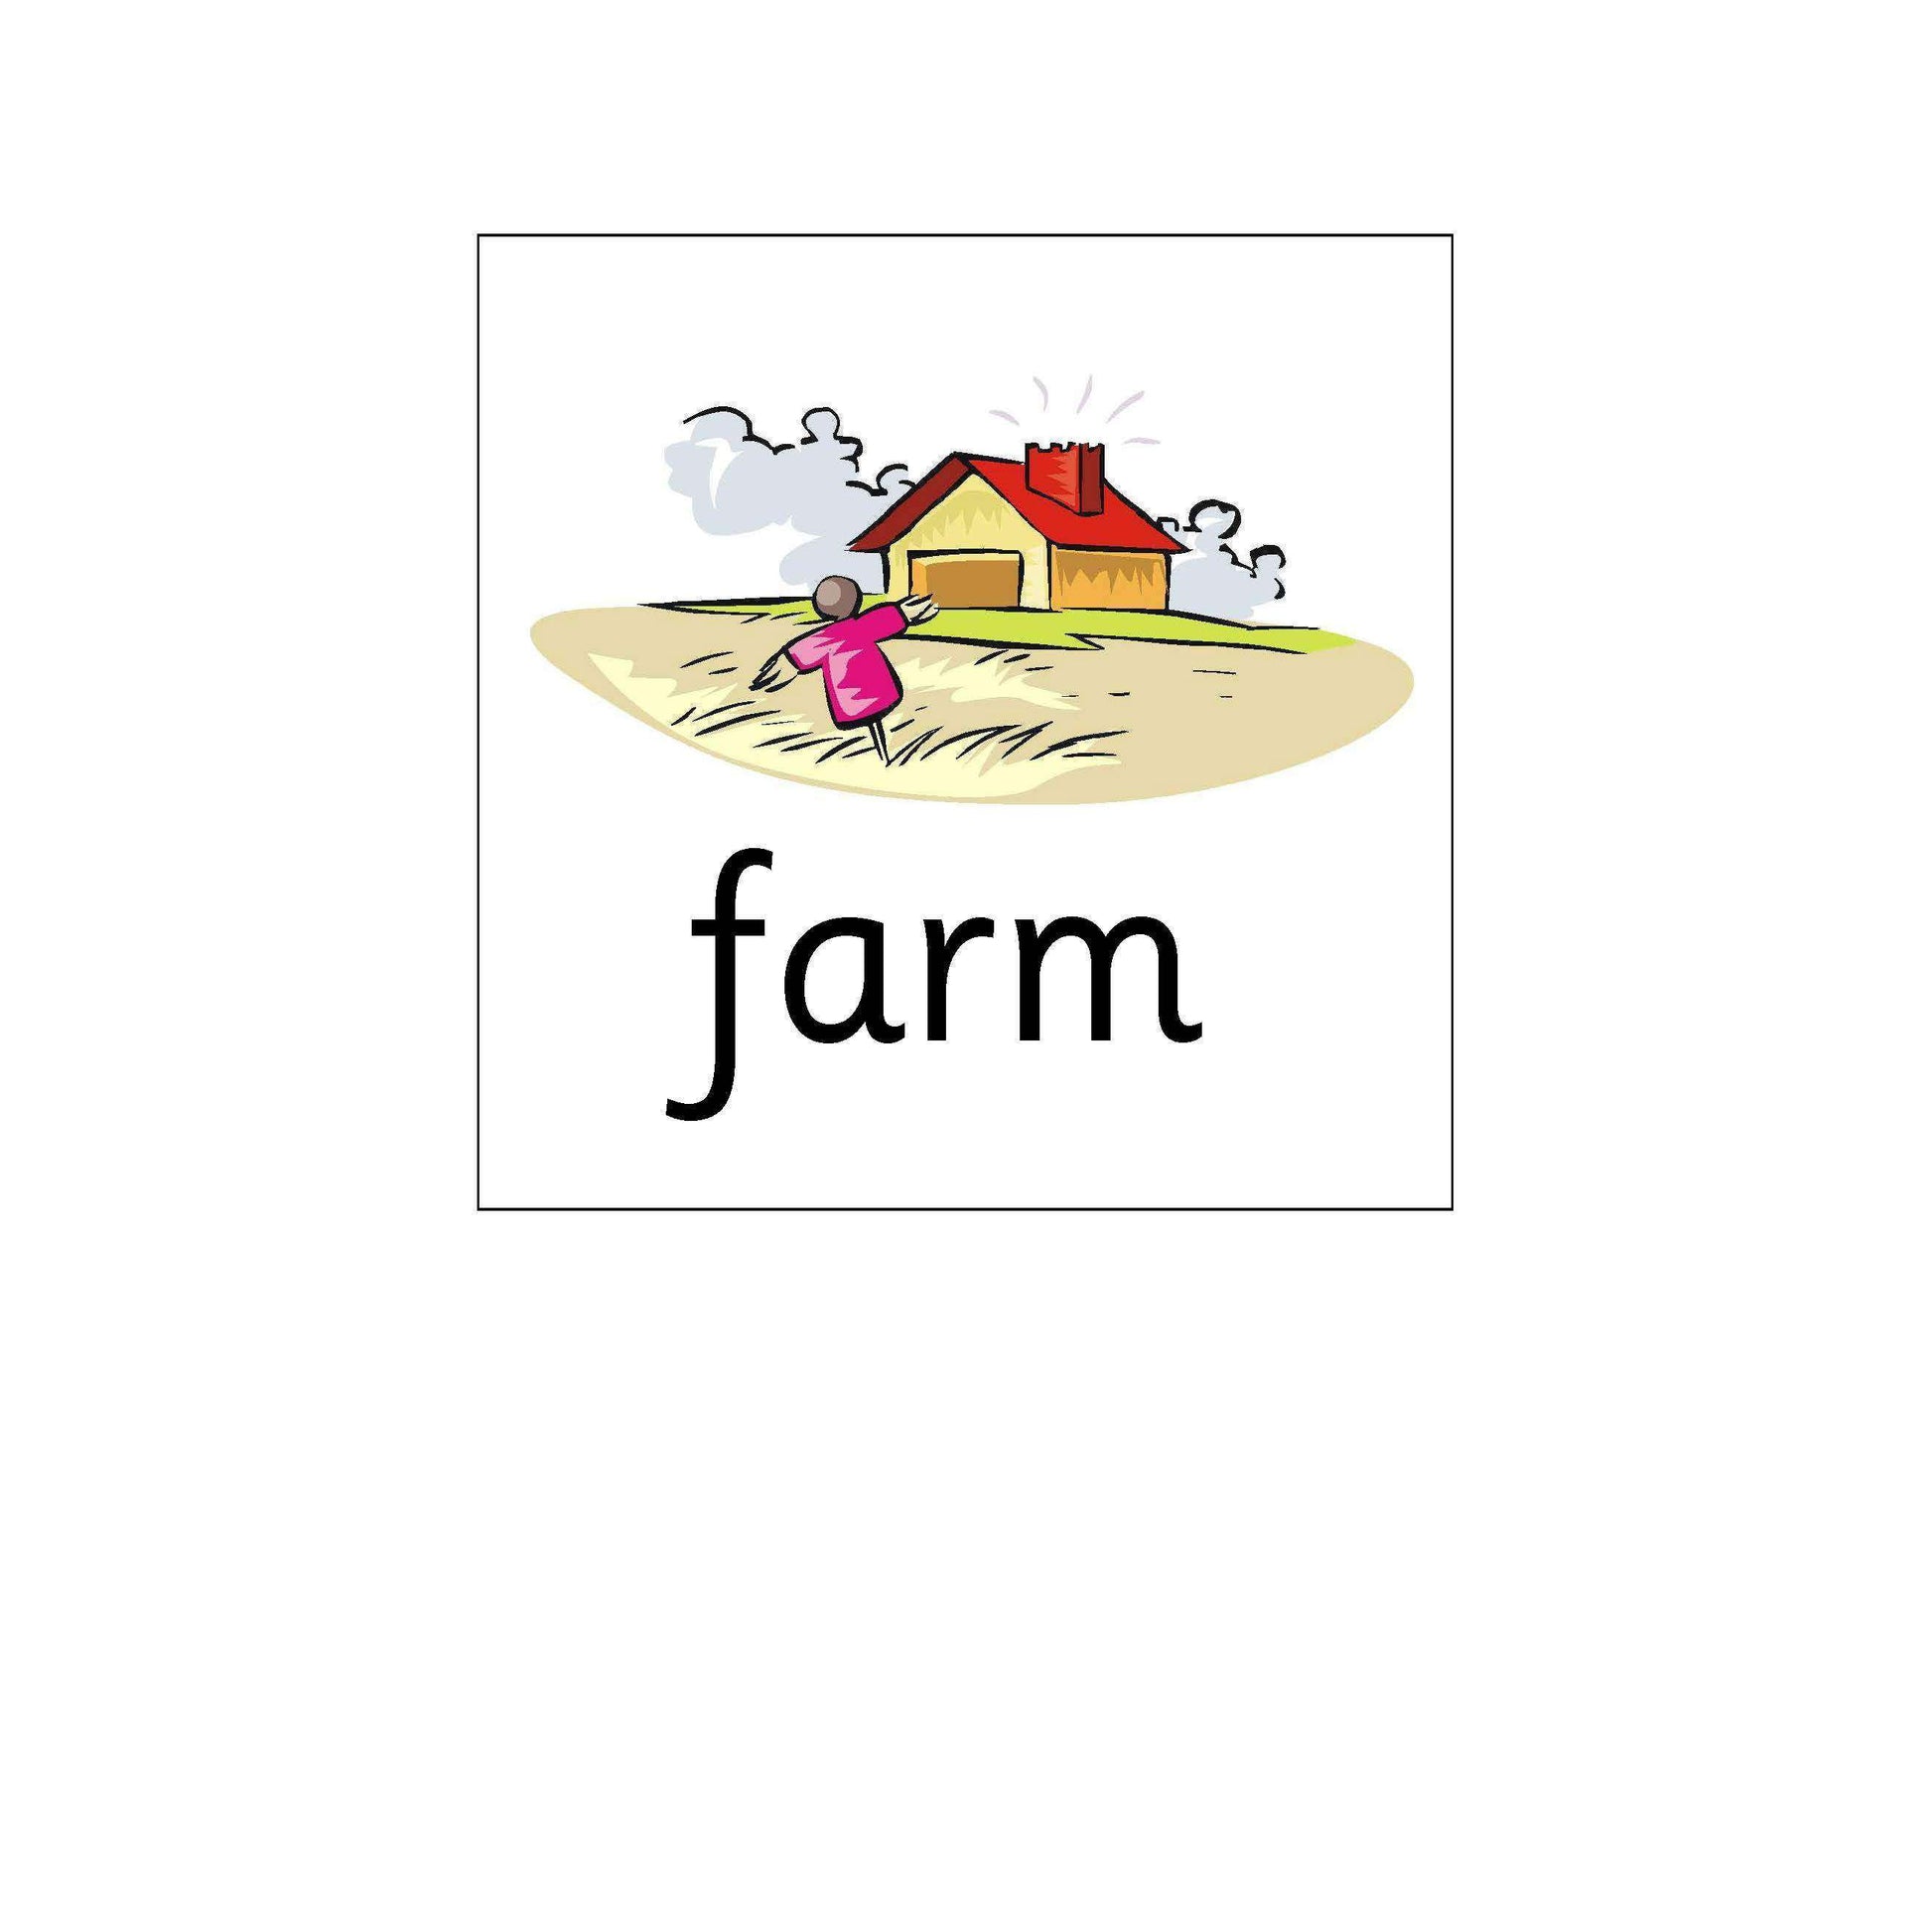 Floor Robot Cards - Farm Words:Primary Classroom Resources